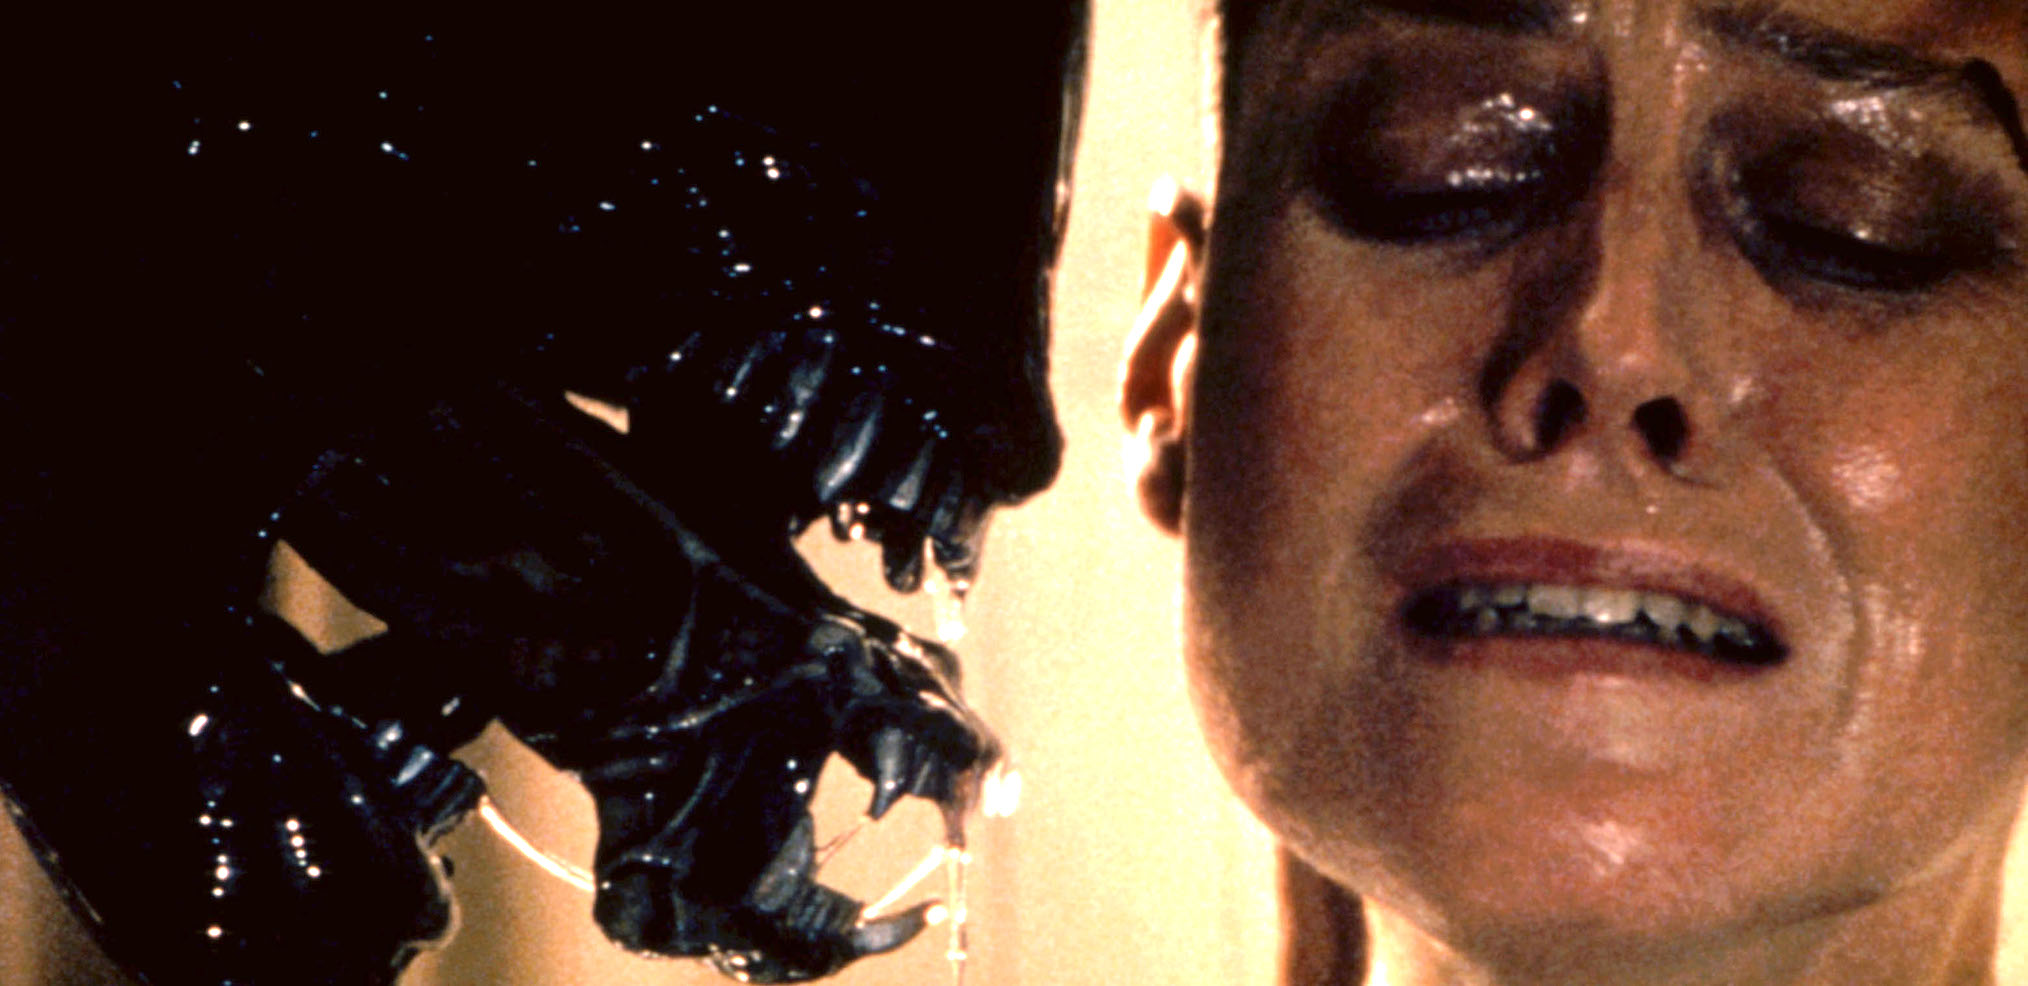 Sigourney Weaver in 'Alien 3' (1992)